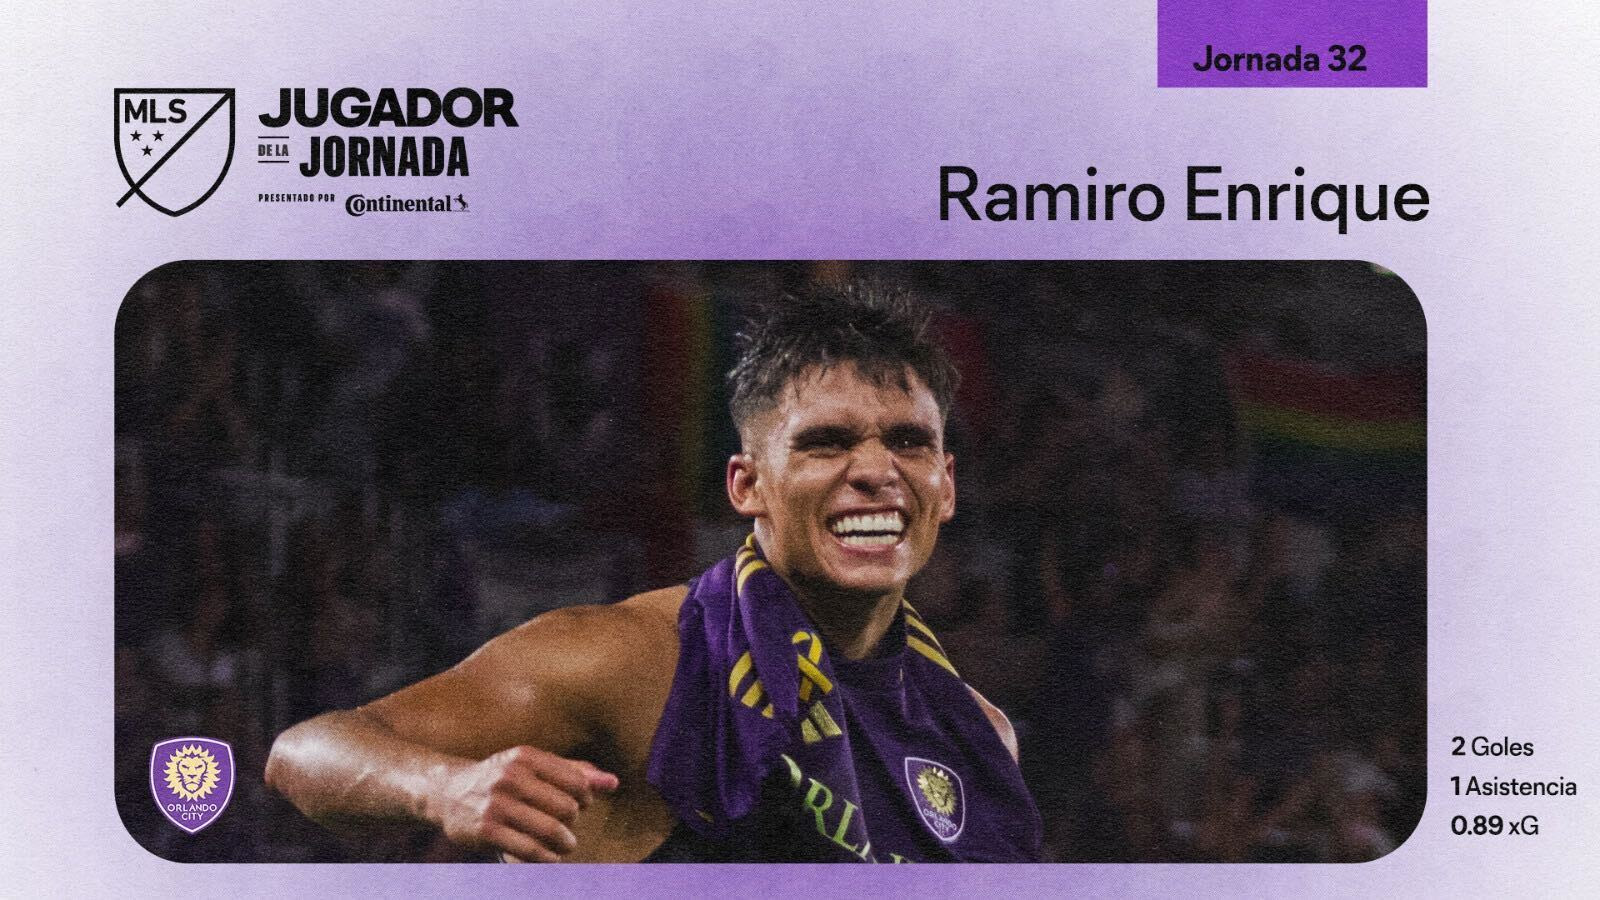 unnamed 1 8 - Ramiro Enrique Jugador de la Jornada en la MLS